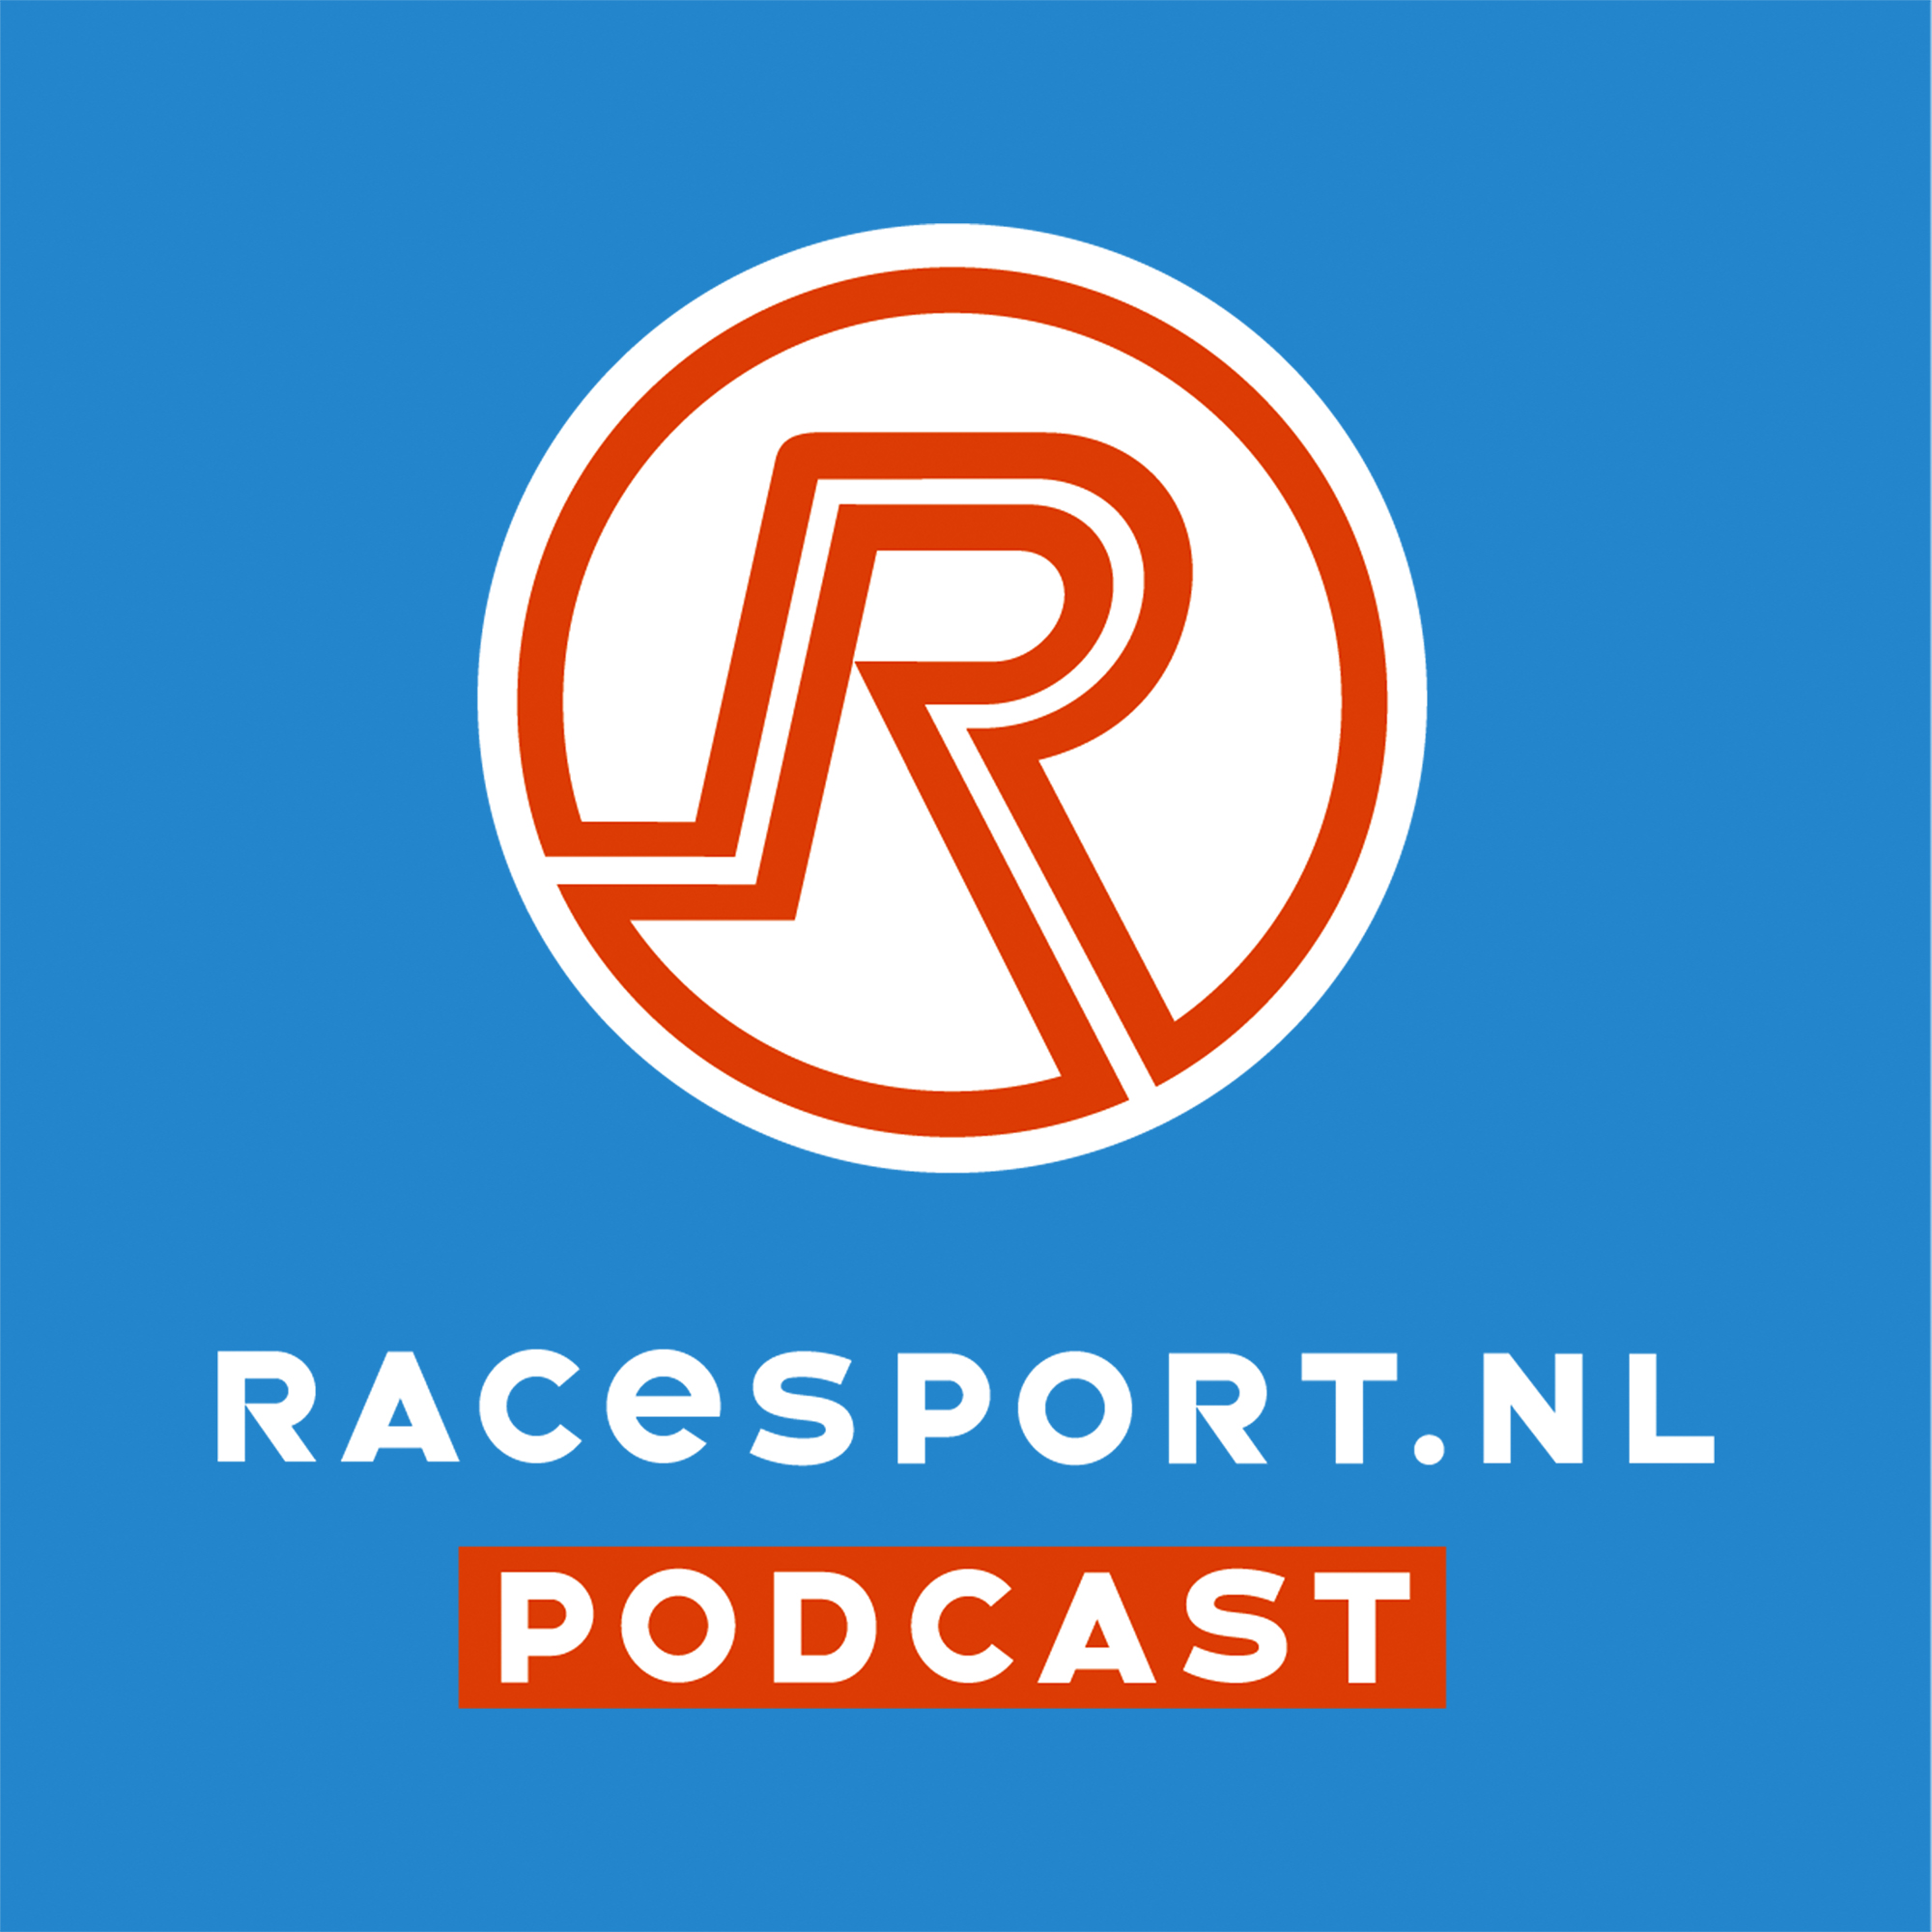 Racesport.nl - Podcast logo